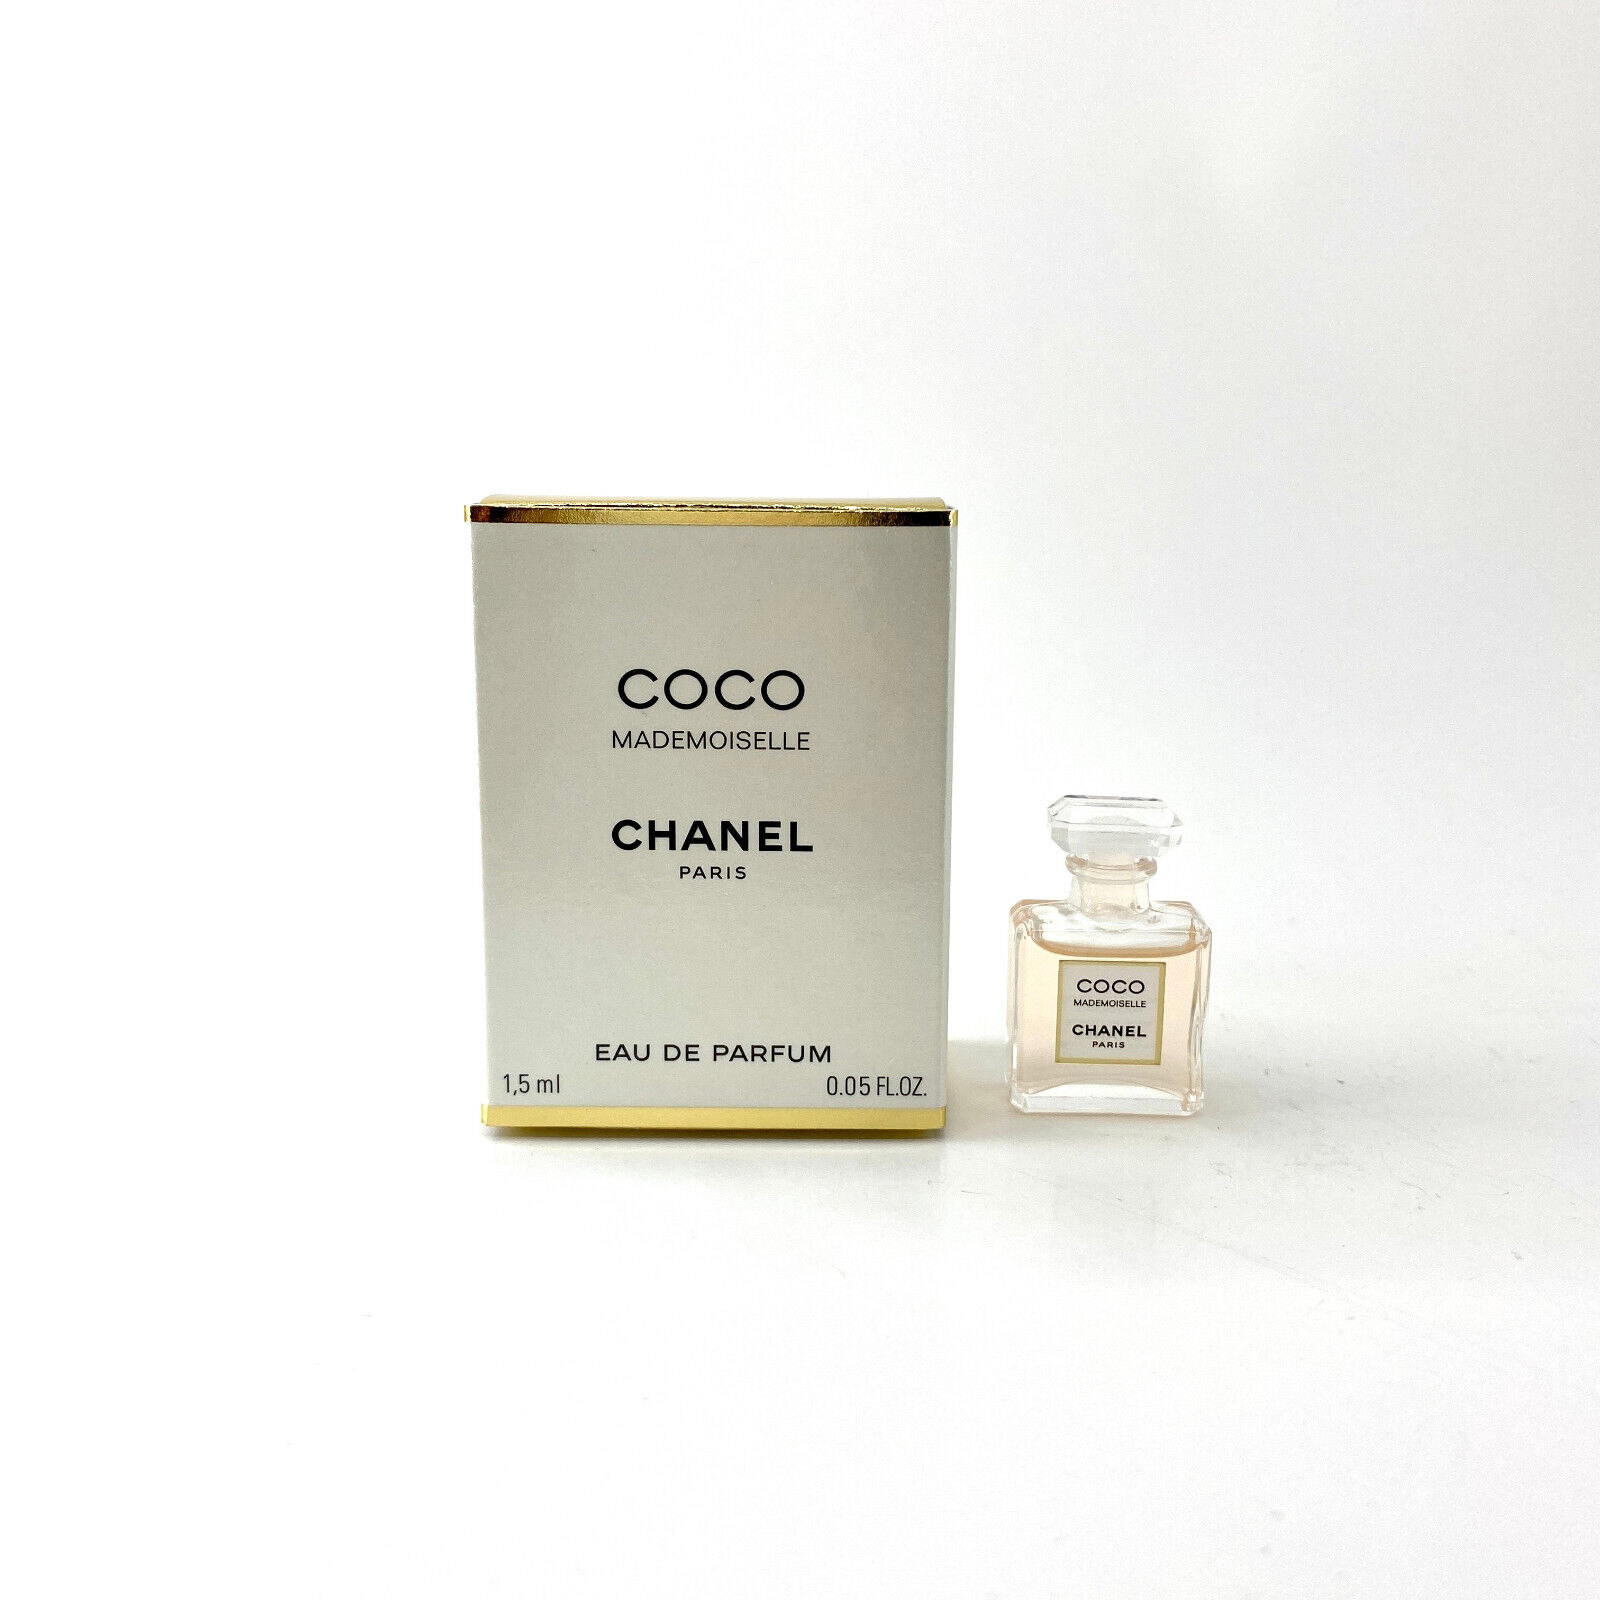 Chanel Coco Mademoiselle Eau de Parfum 1.5 ml. 0.05 fl.oz. mini micro perfume